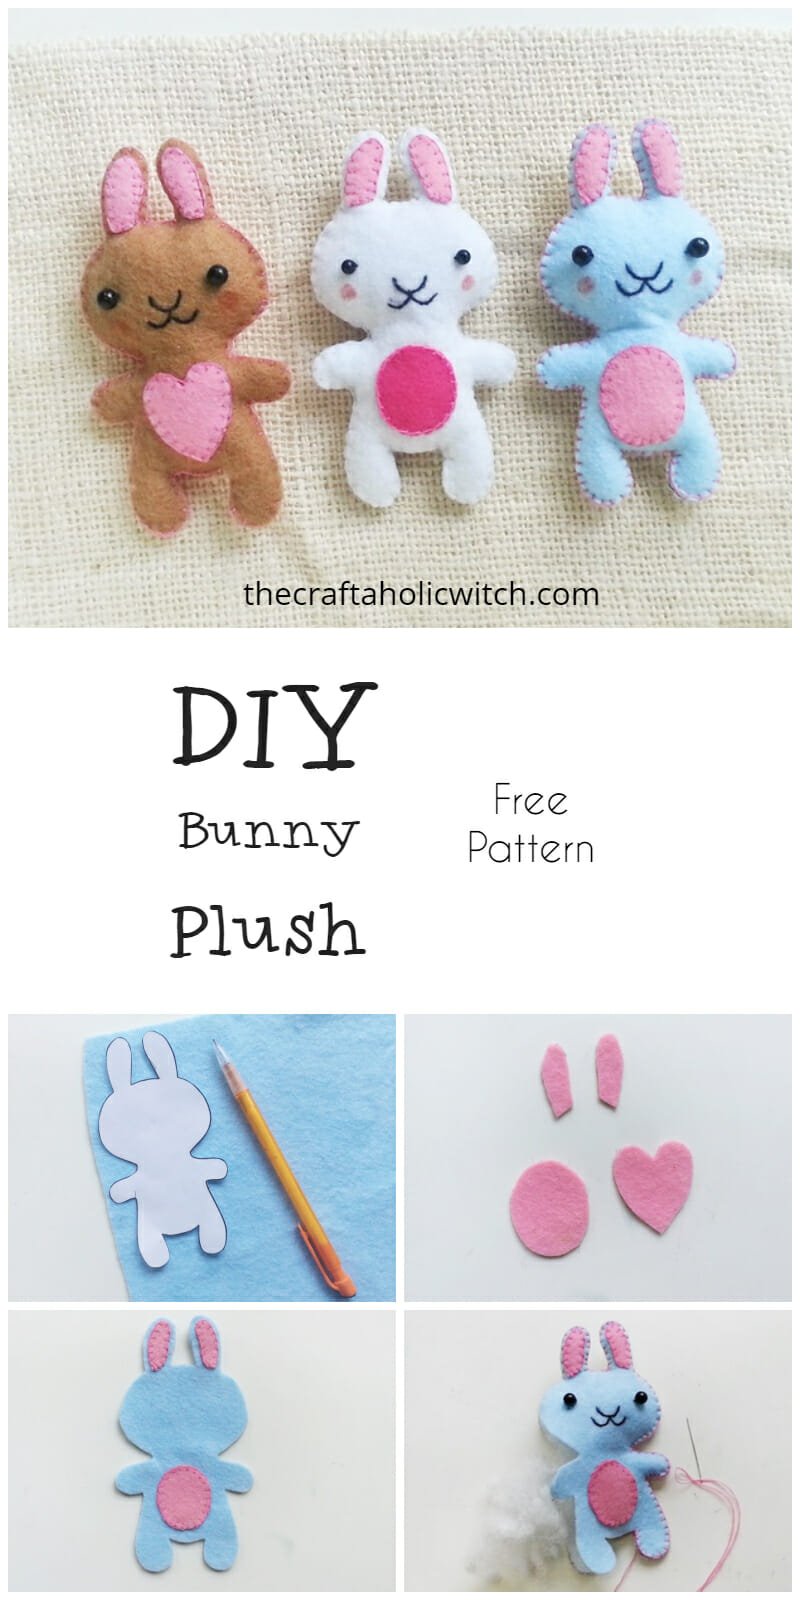 bunny plush pin image - Free Bunny Sewing Pattern and DIY Felt Bunny Tutorial